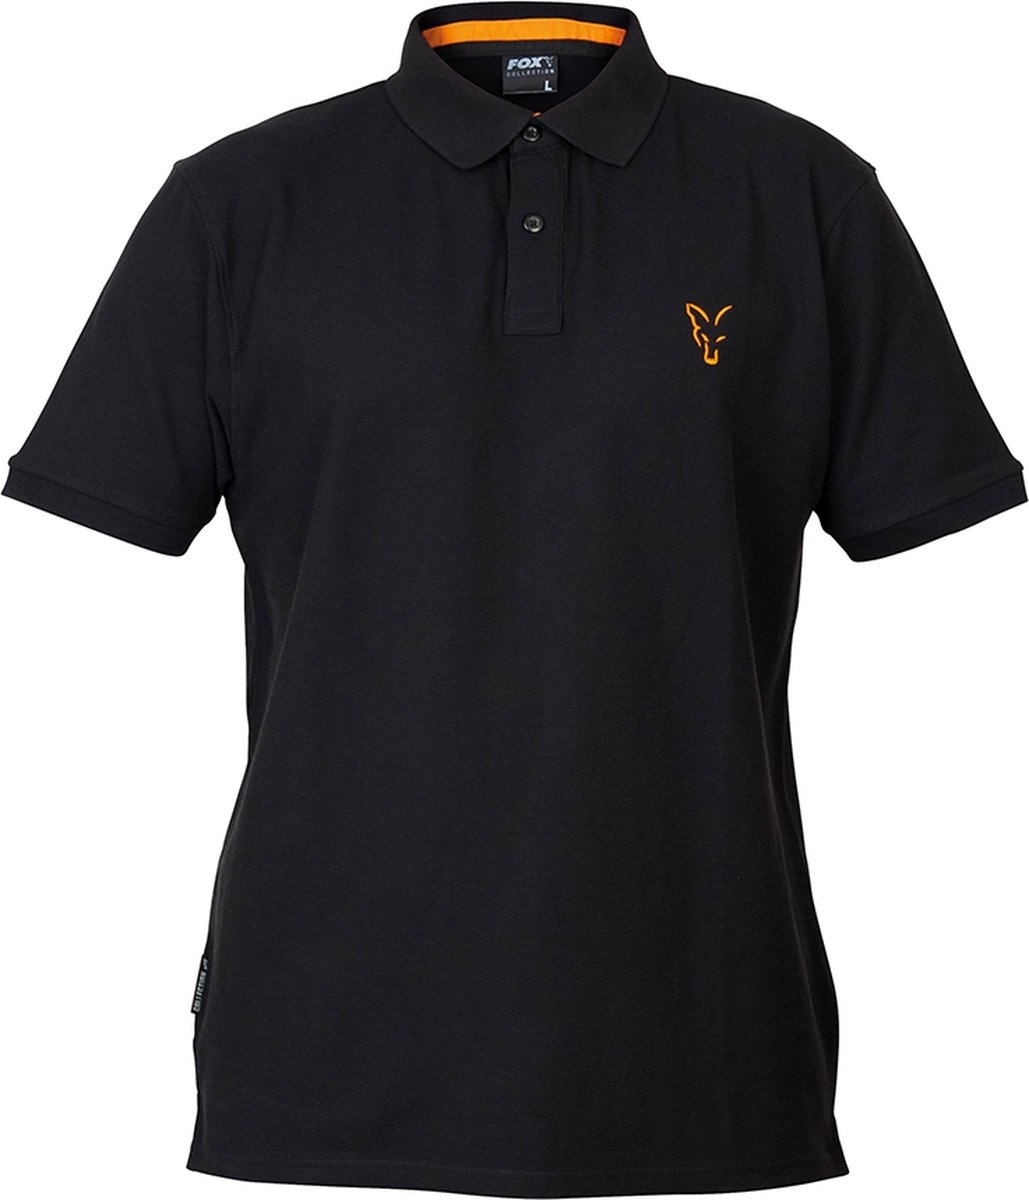 Fox Collection Black/Orange - Polo Shirt - Maat M - Zwart